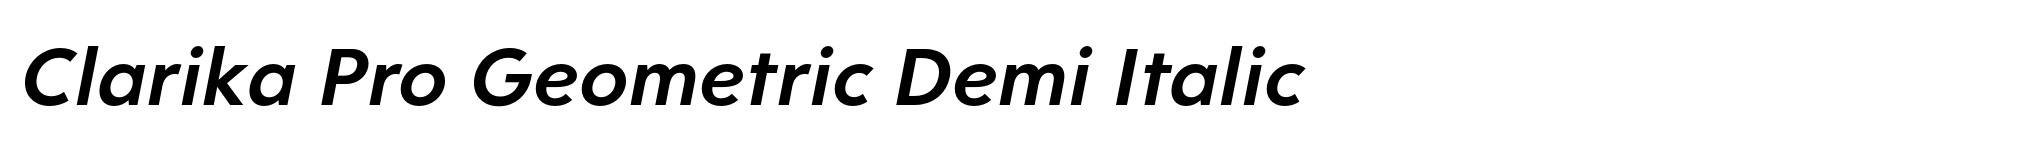 Clarika Pro Geometric Demi Italic image